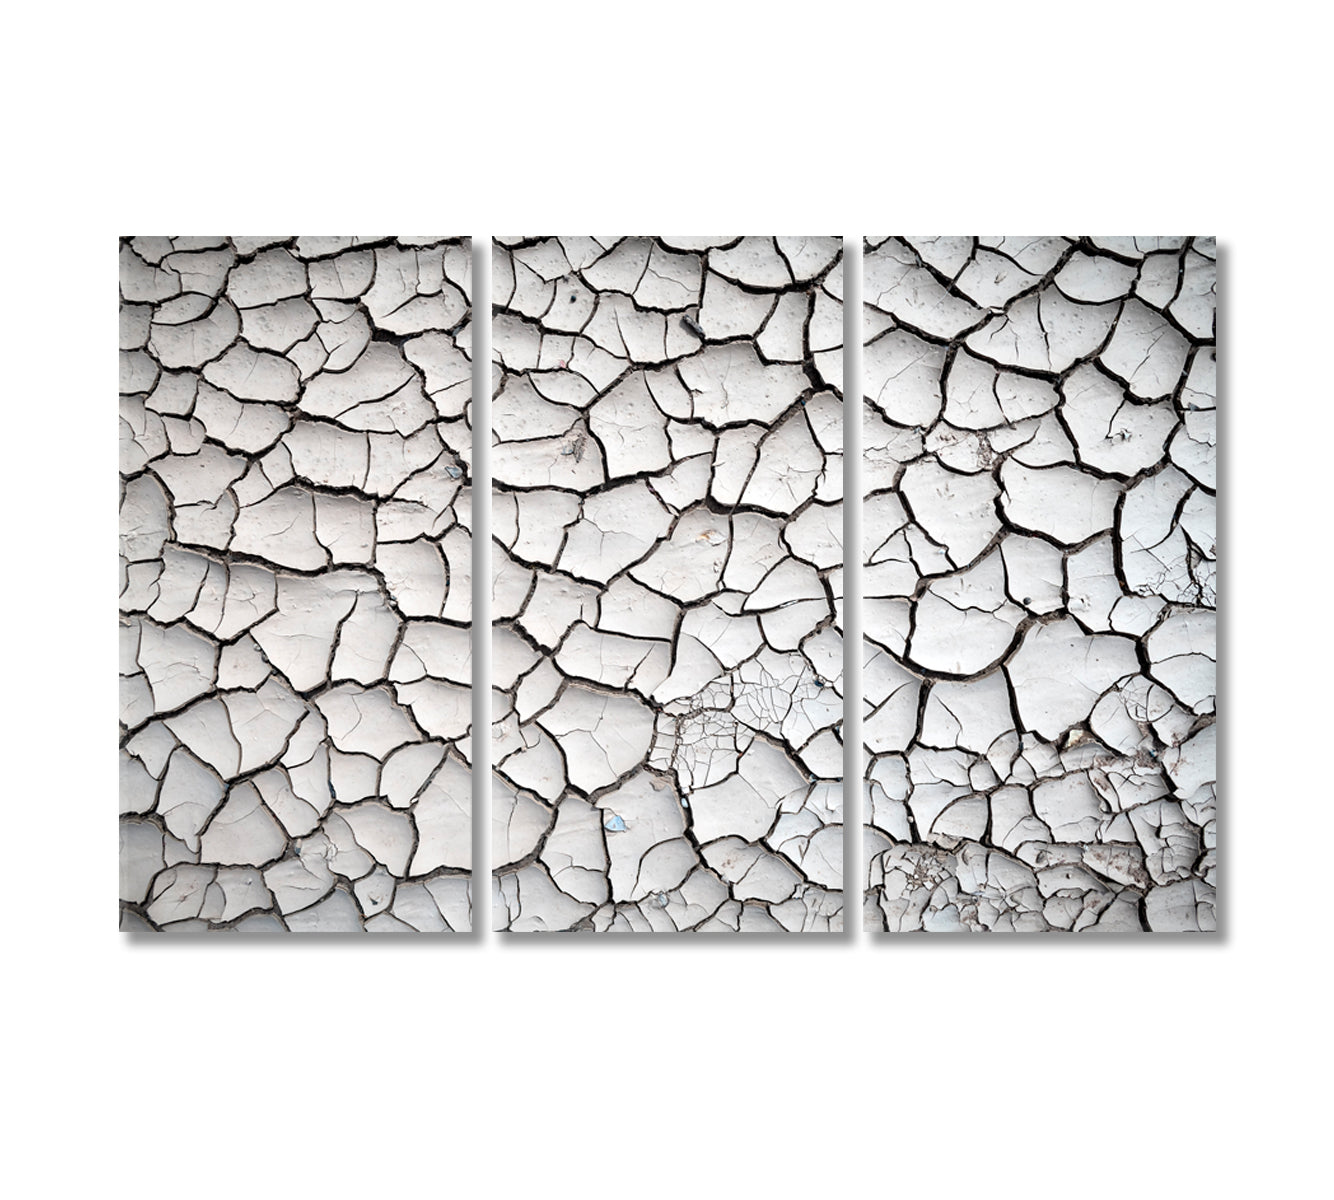 Cracked Land Canvas Print-Canvas Print-CetArt-3 Panels-36x24 inches-CetArt